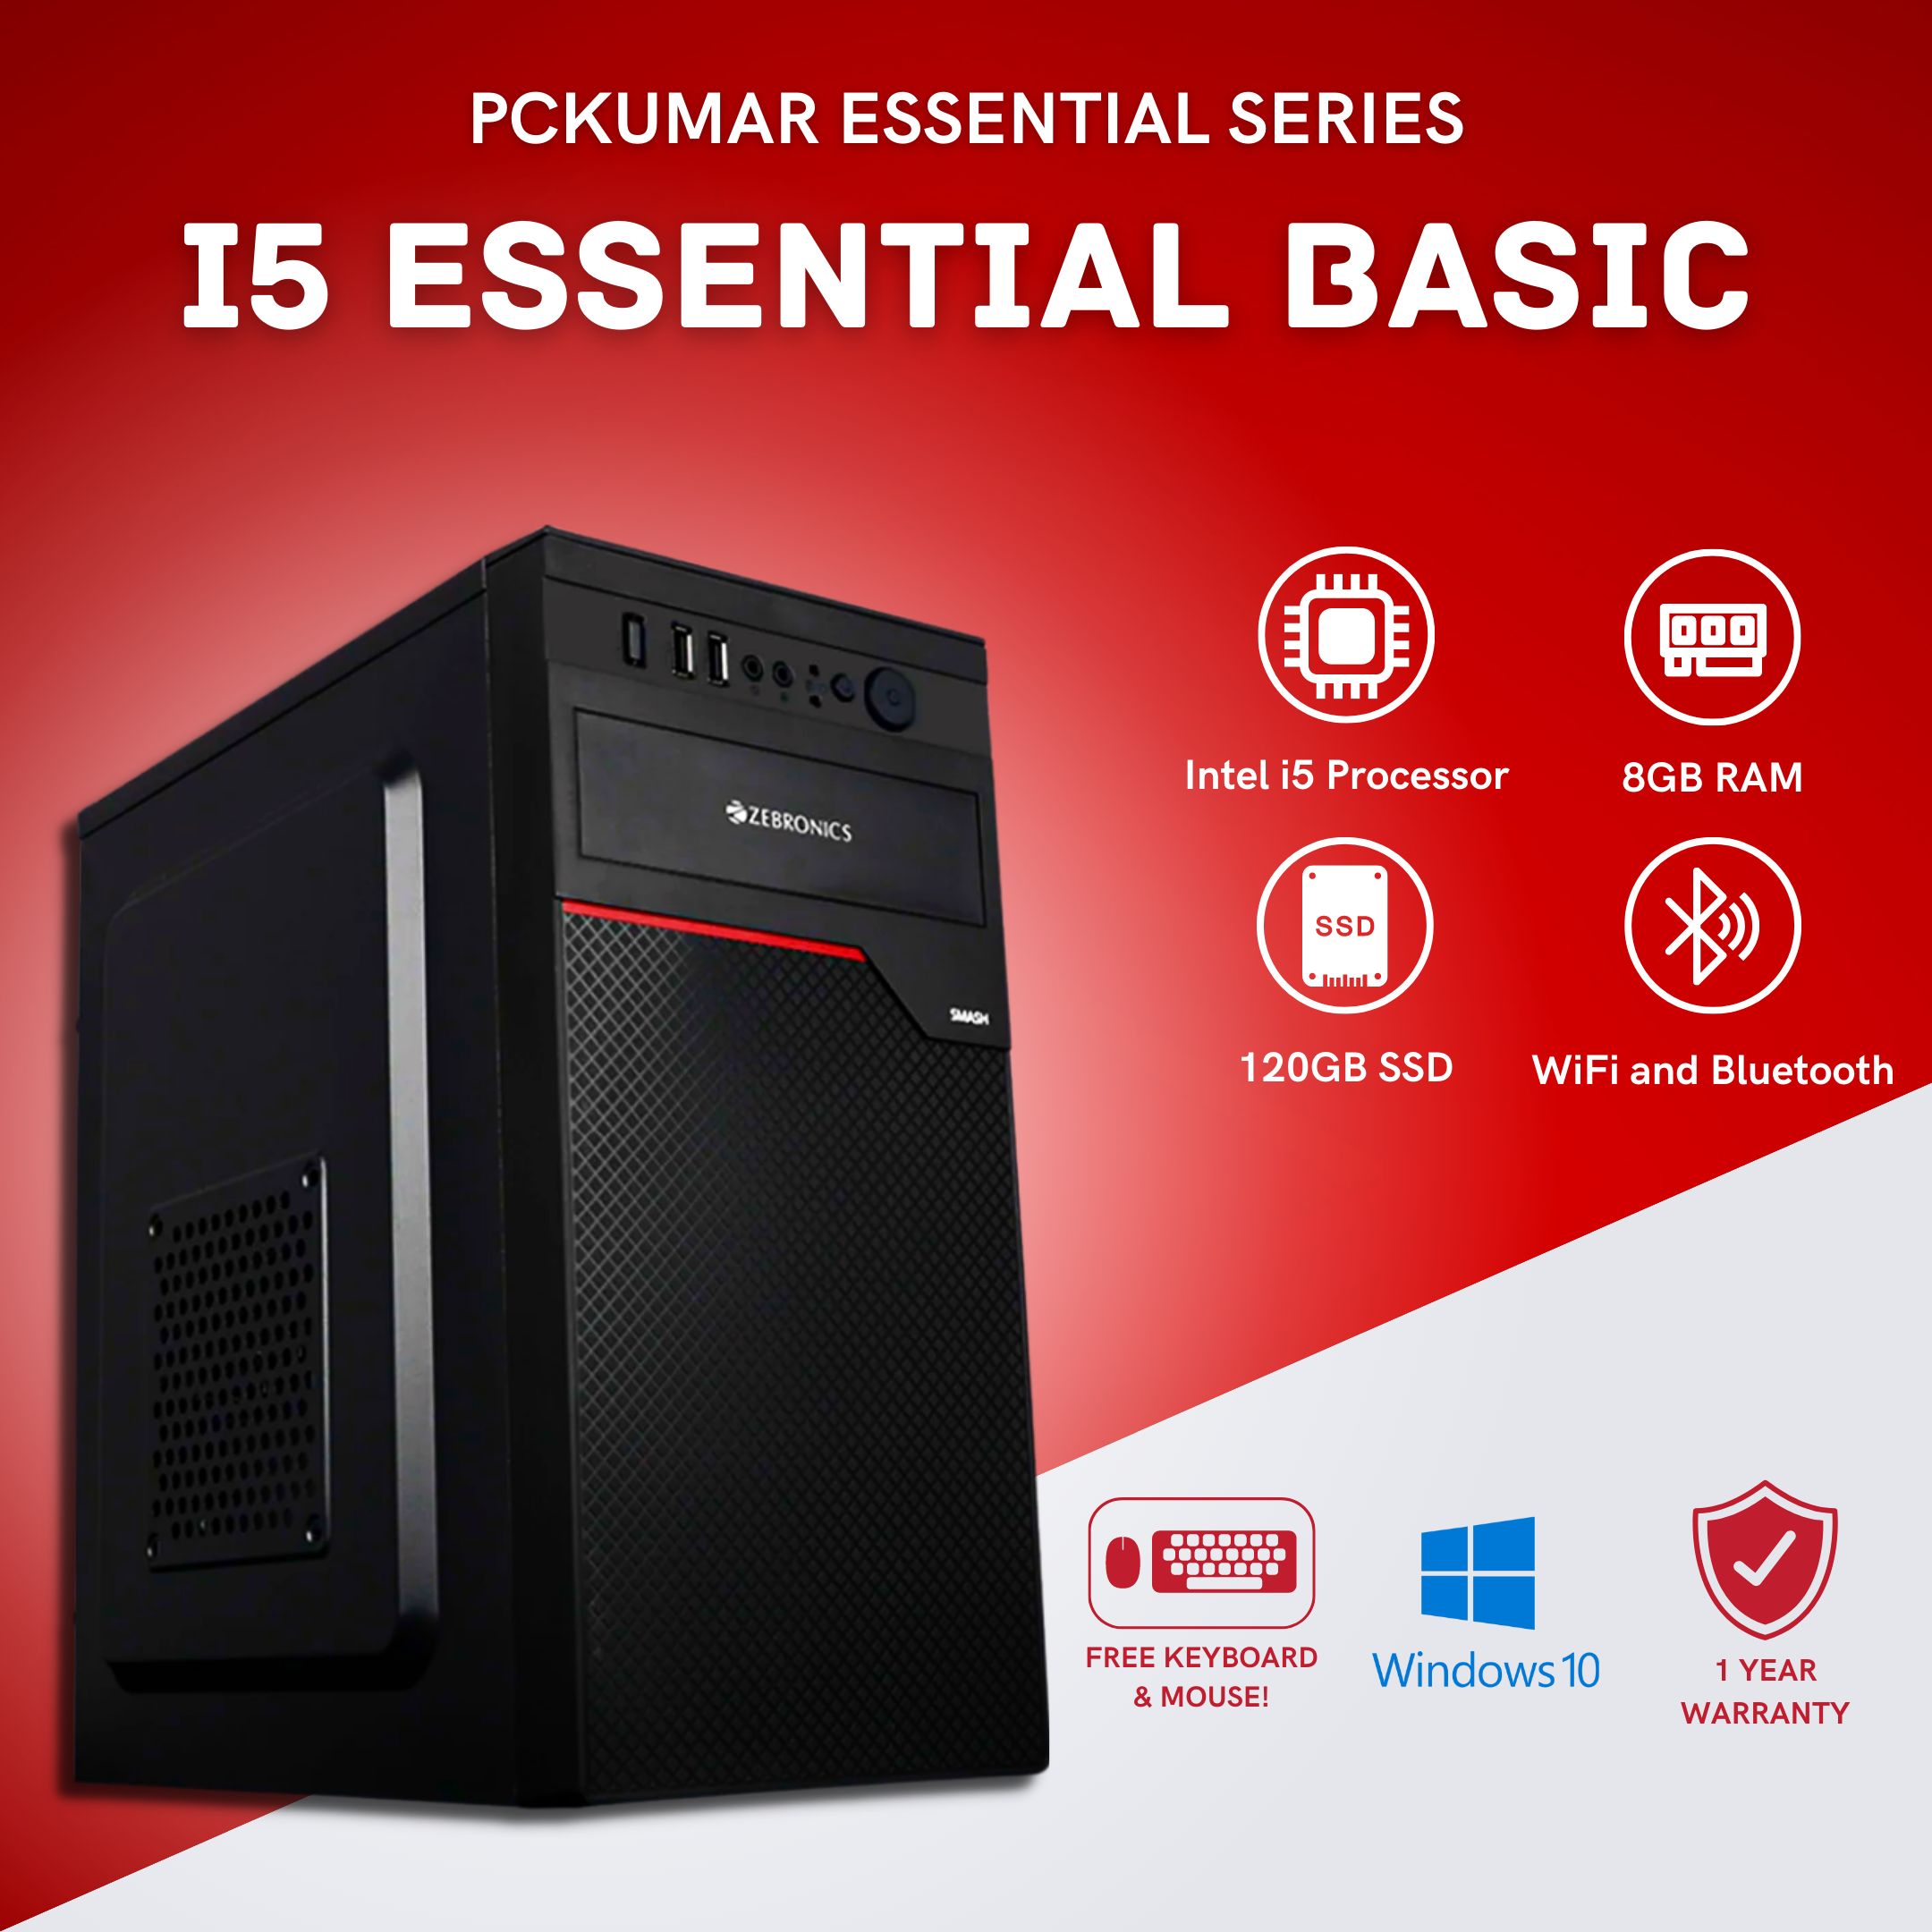 PC Kumar Intel i5 Essential Basic PC for 9999/-